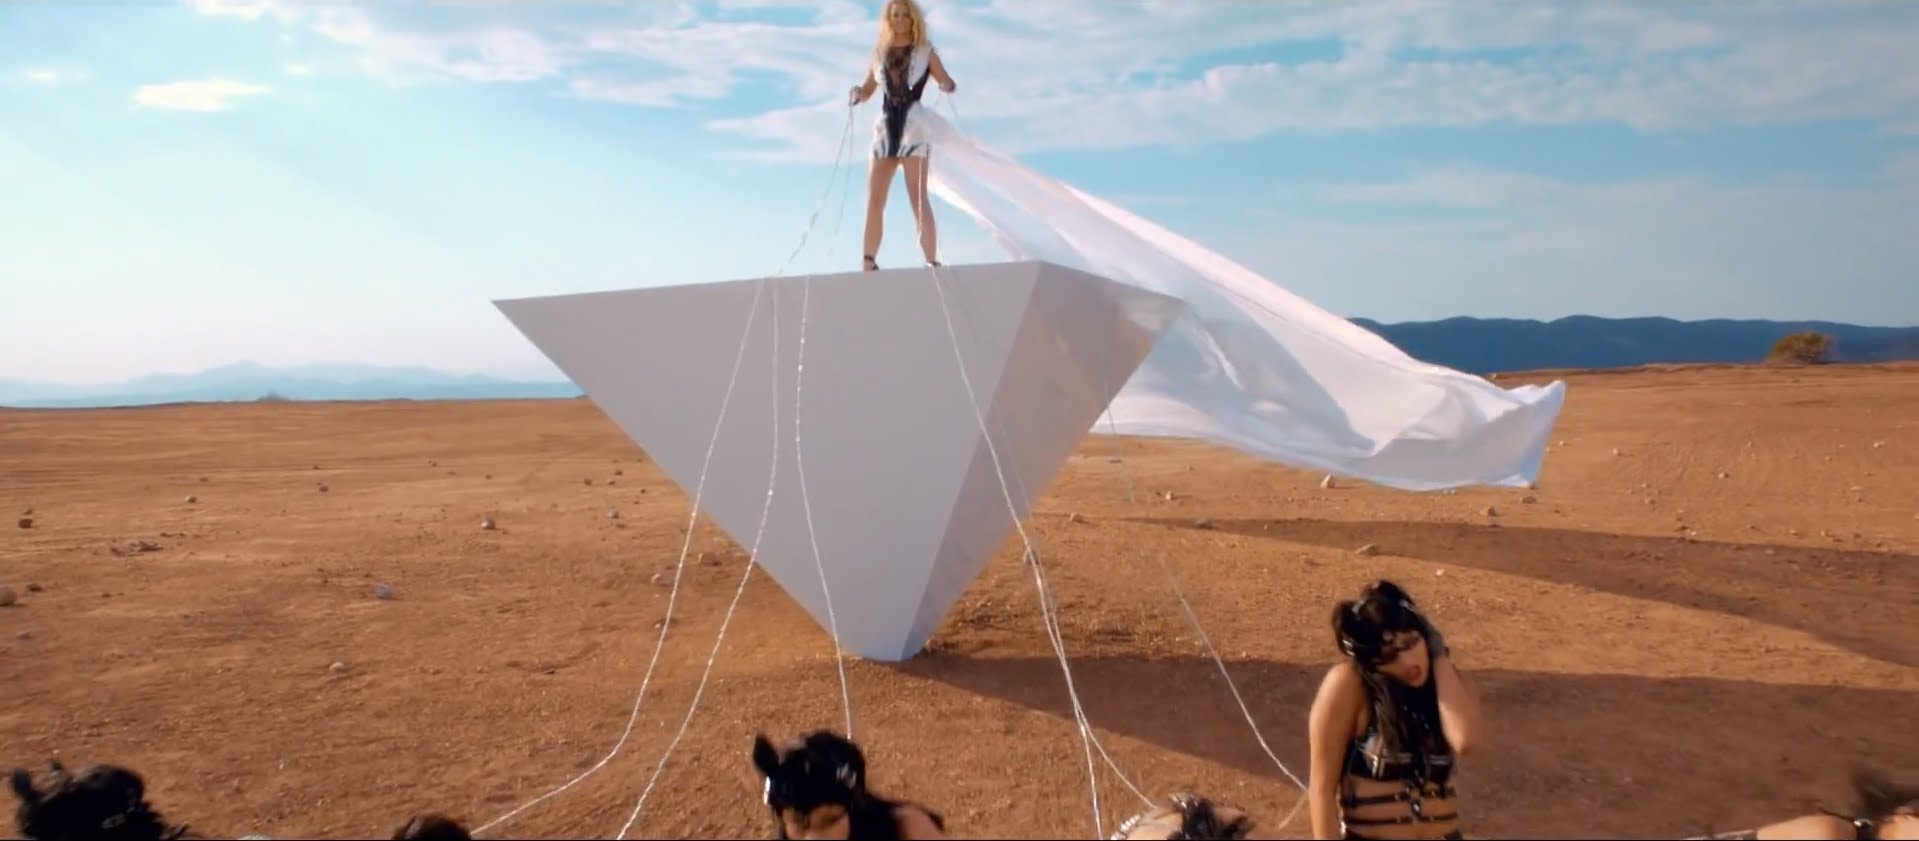 Britney Spears Work B**ch: Illuminati Symbolism